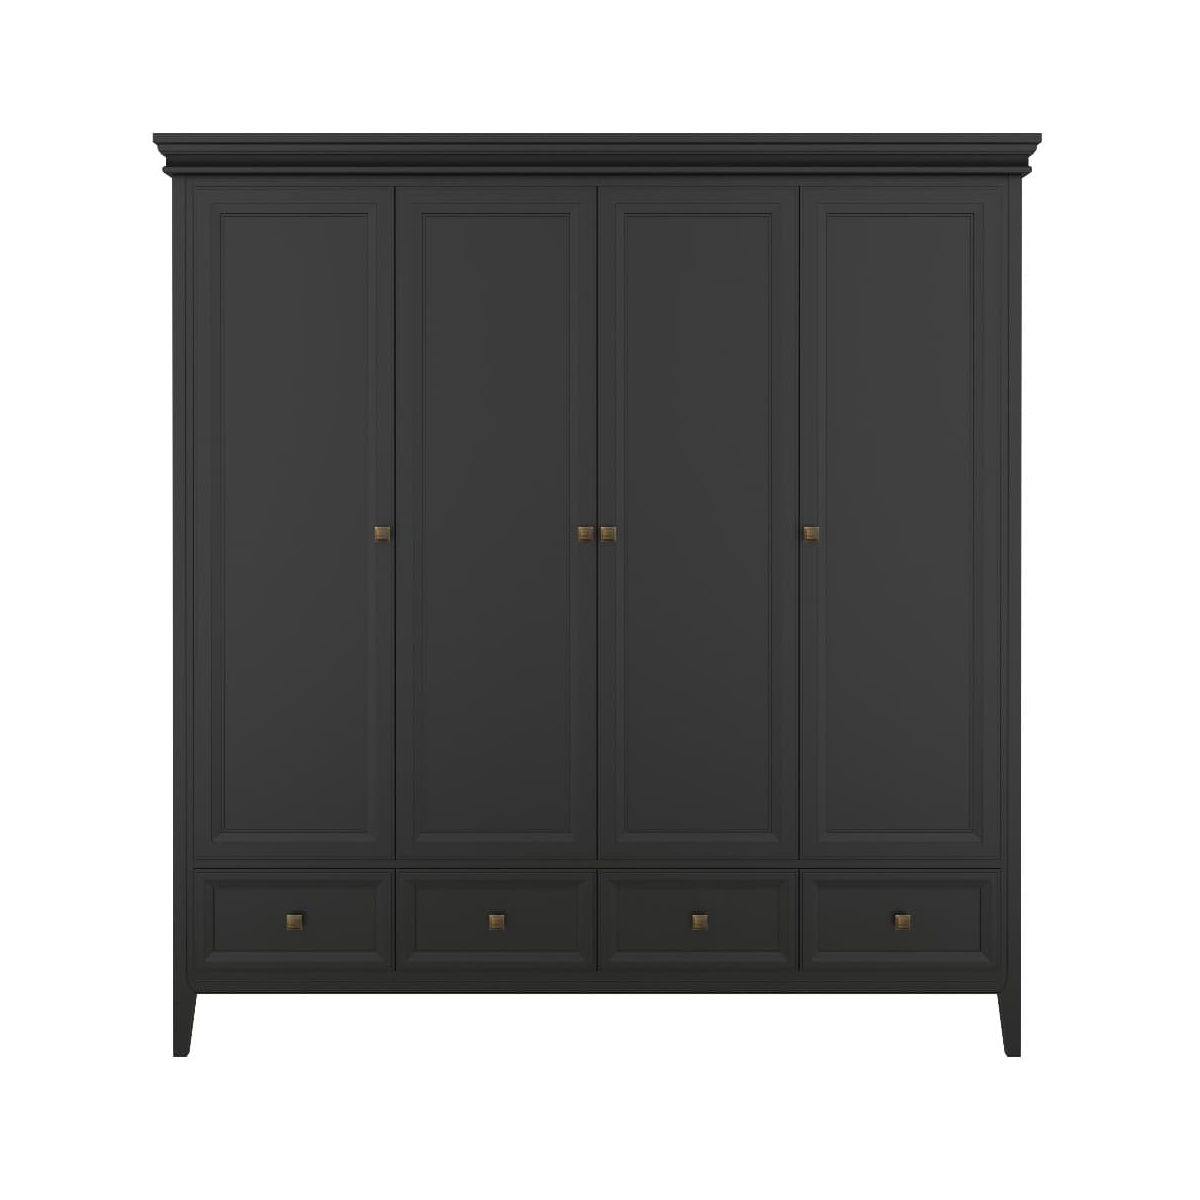 Шкаф платяной Tesoro Black, 4-х дверный, 200х58х206 см, цвет: черный (T804BL)T804BL